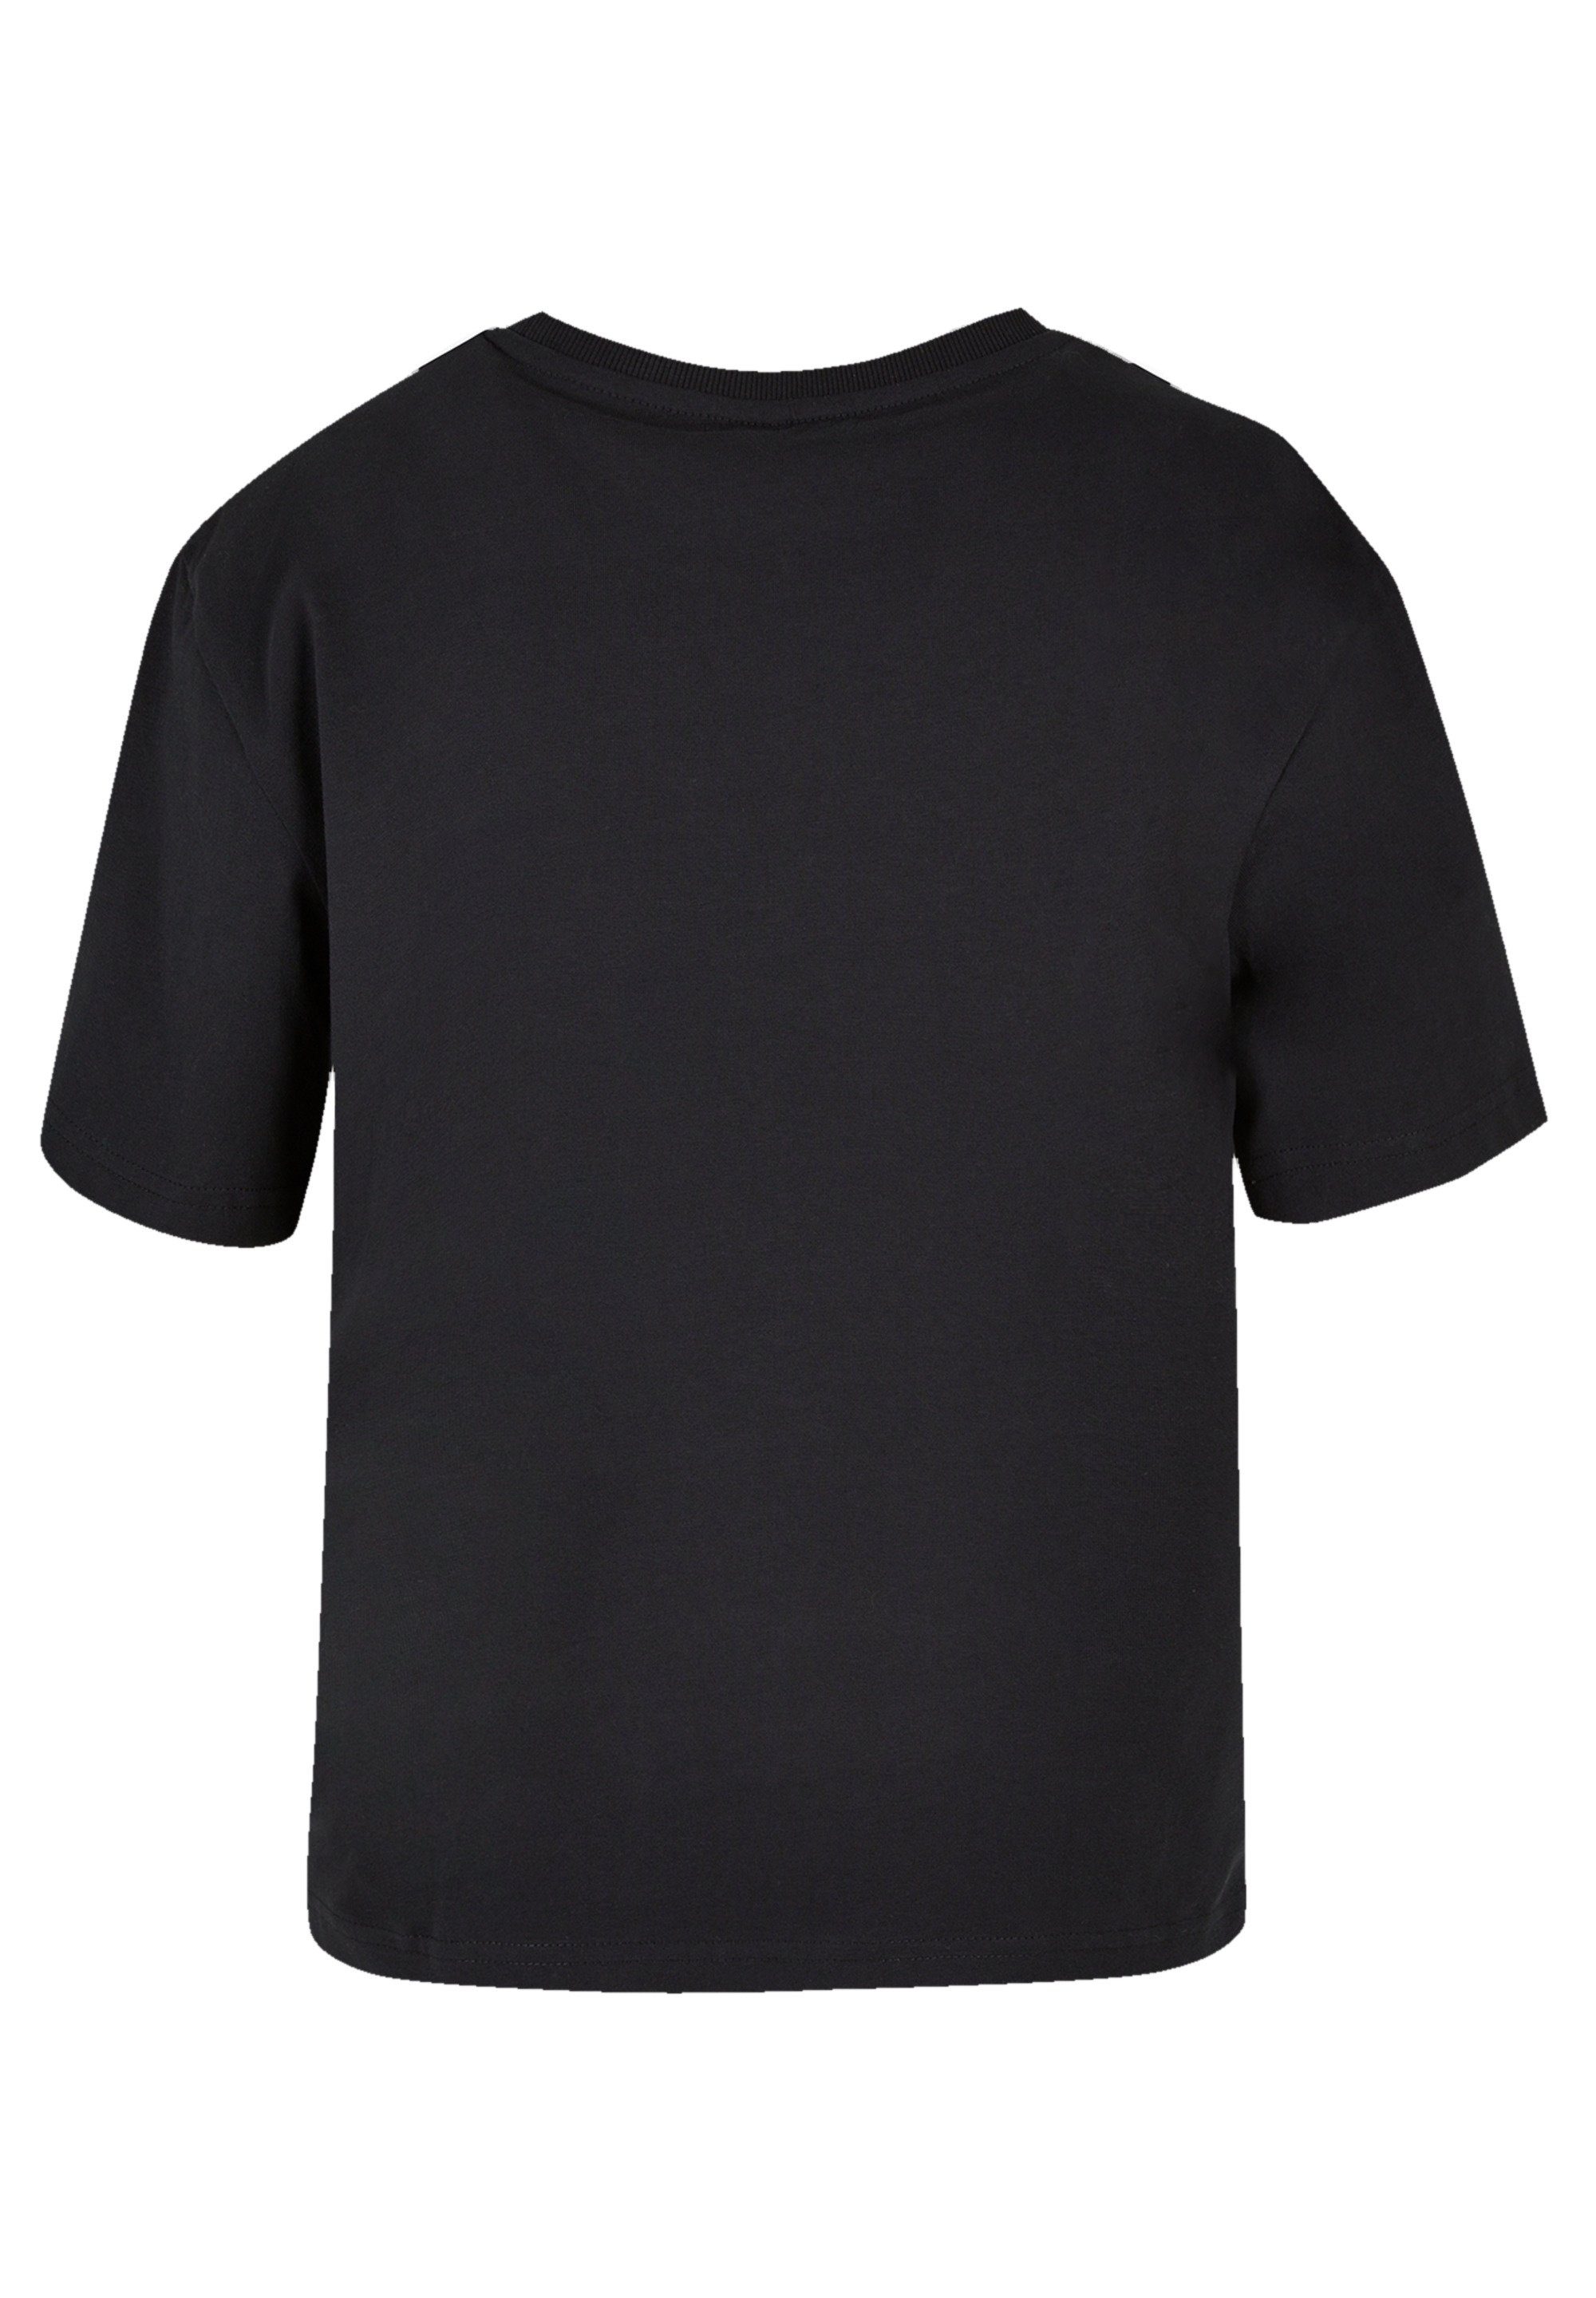 T-Shirt schwarz Logo Classic Premium Jam Band Qualität F4NT4STIC The